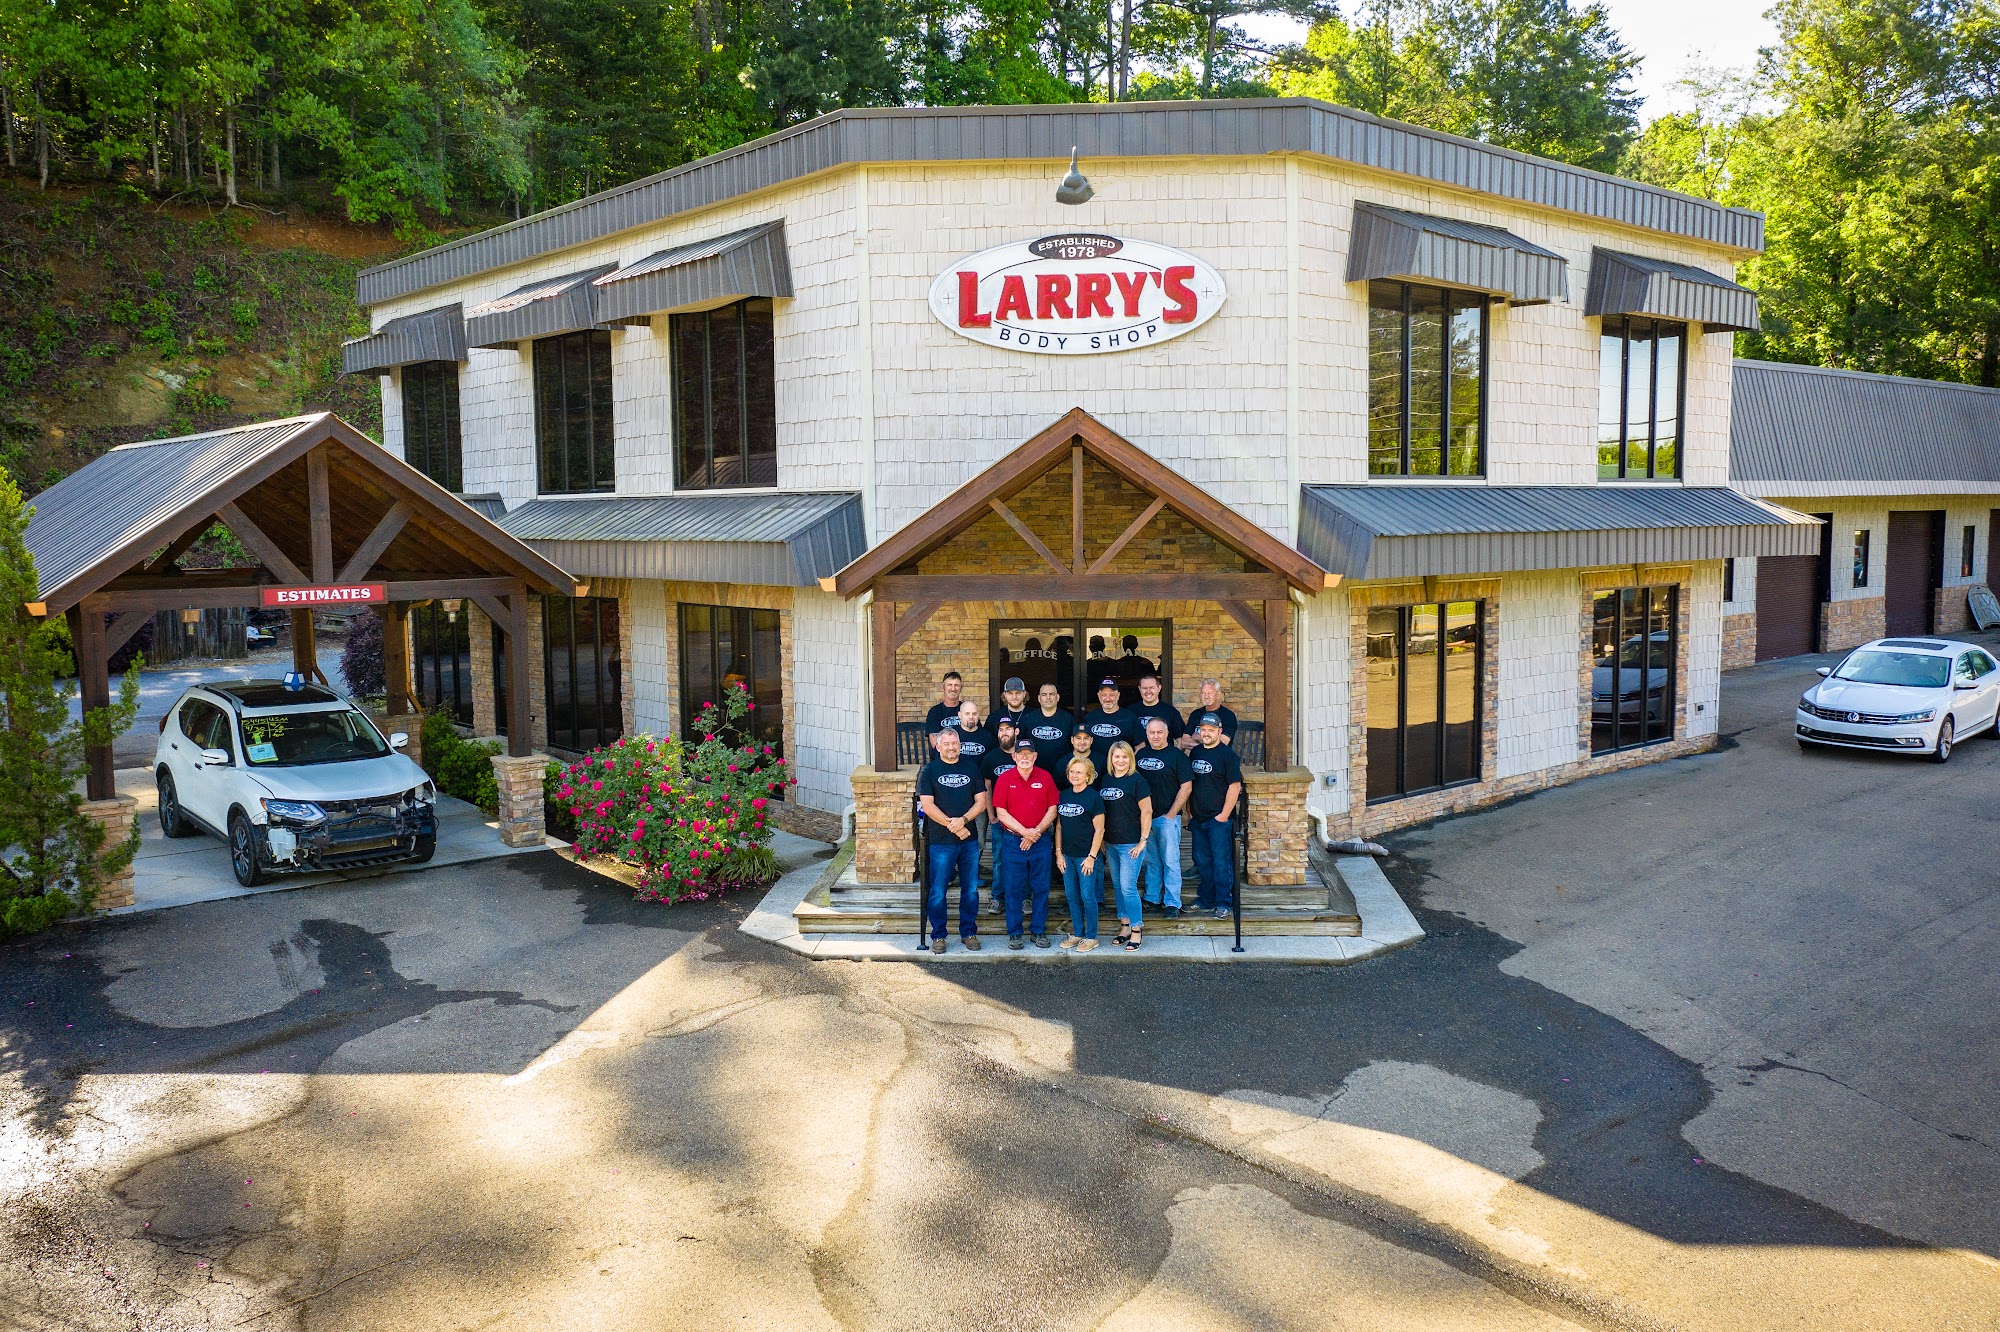 Larry's Body Shop